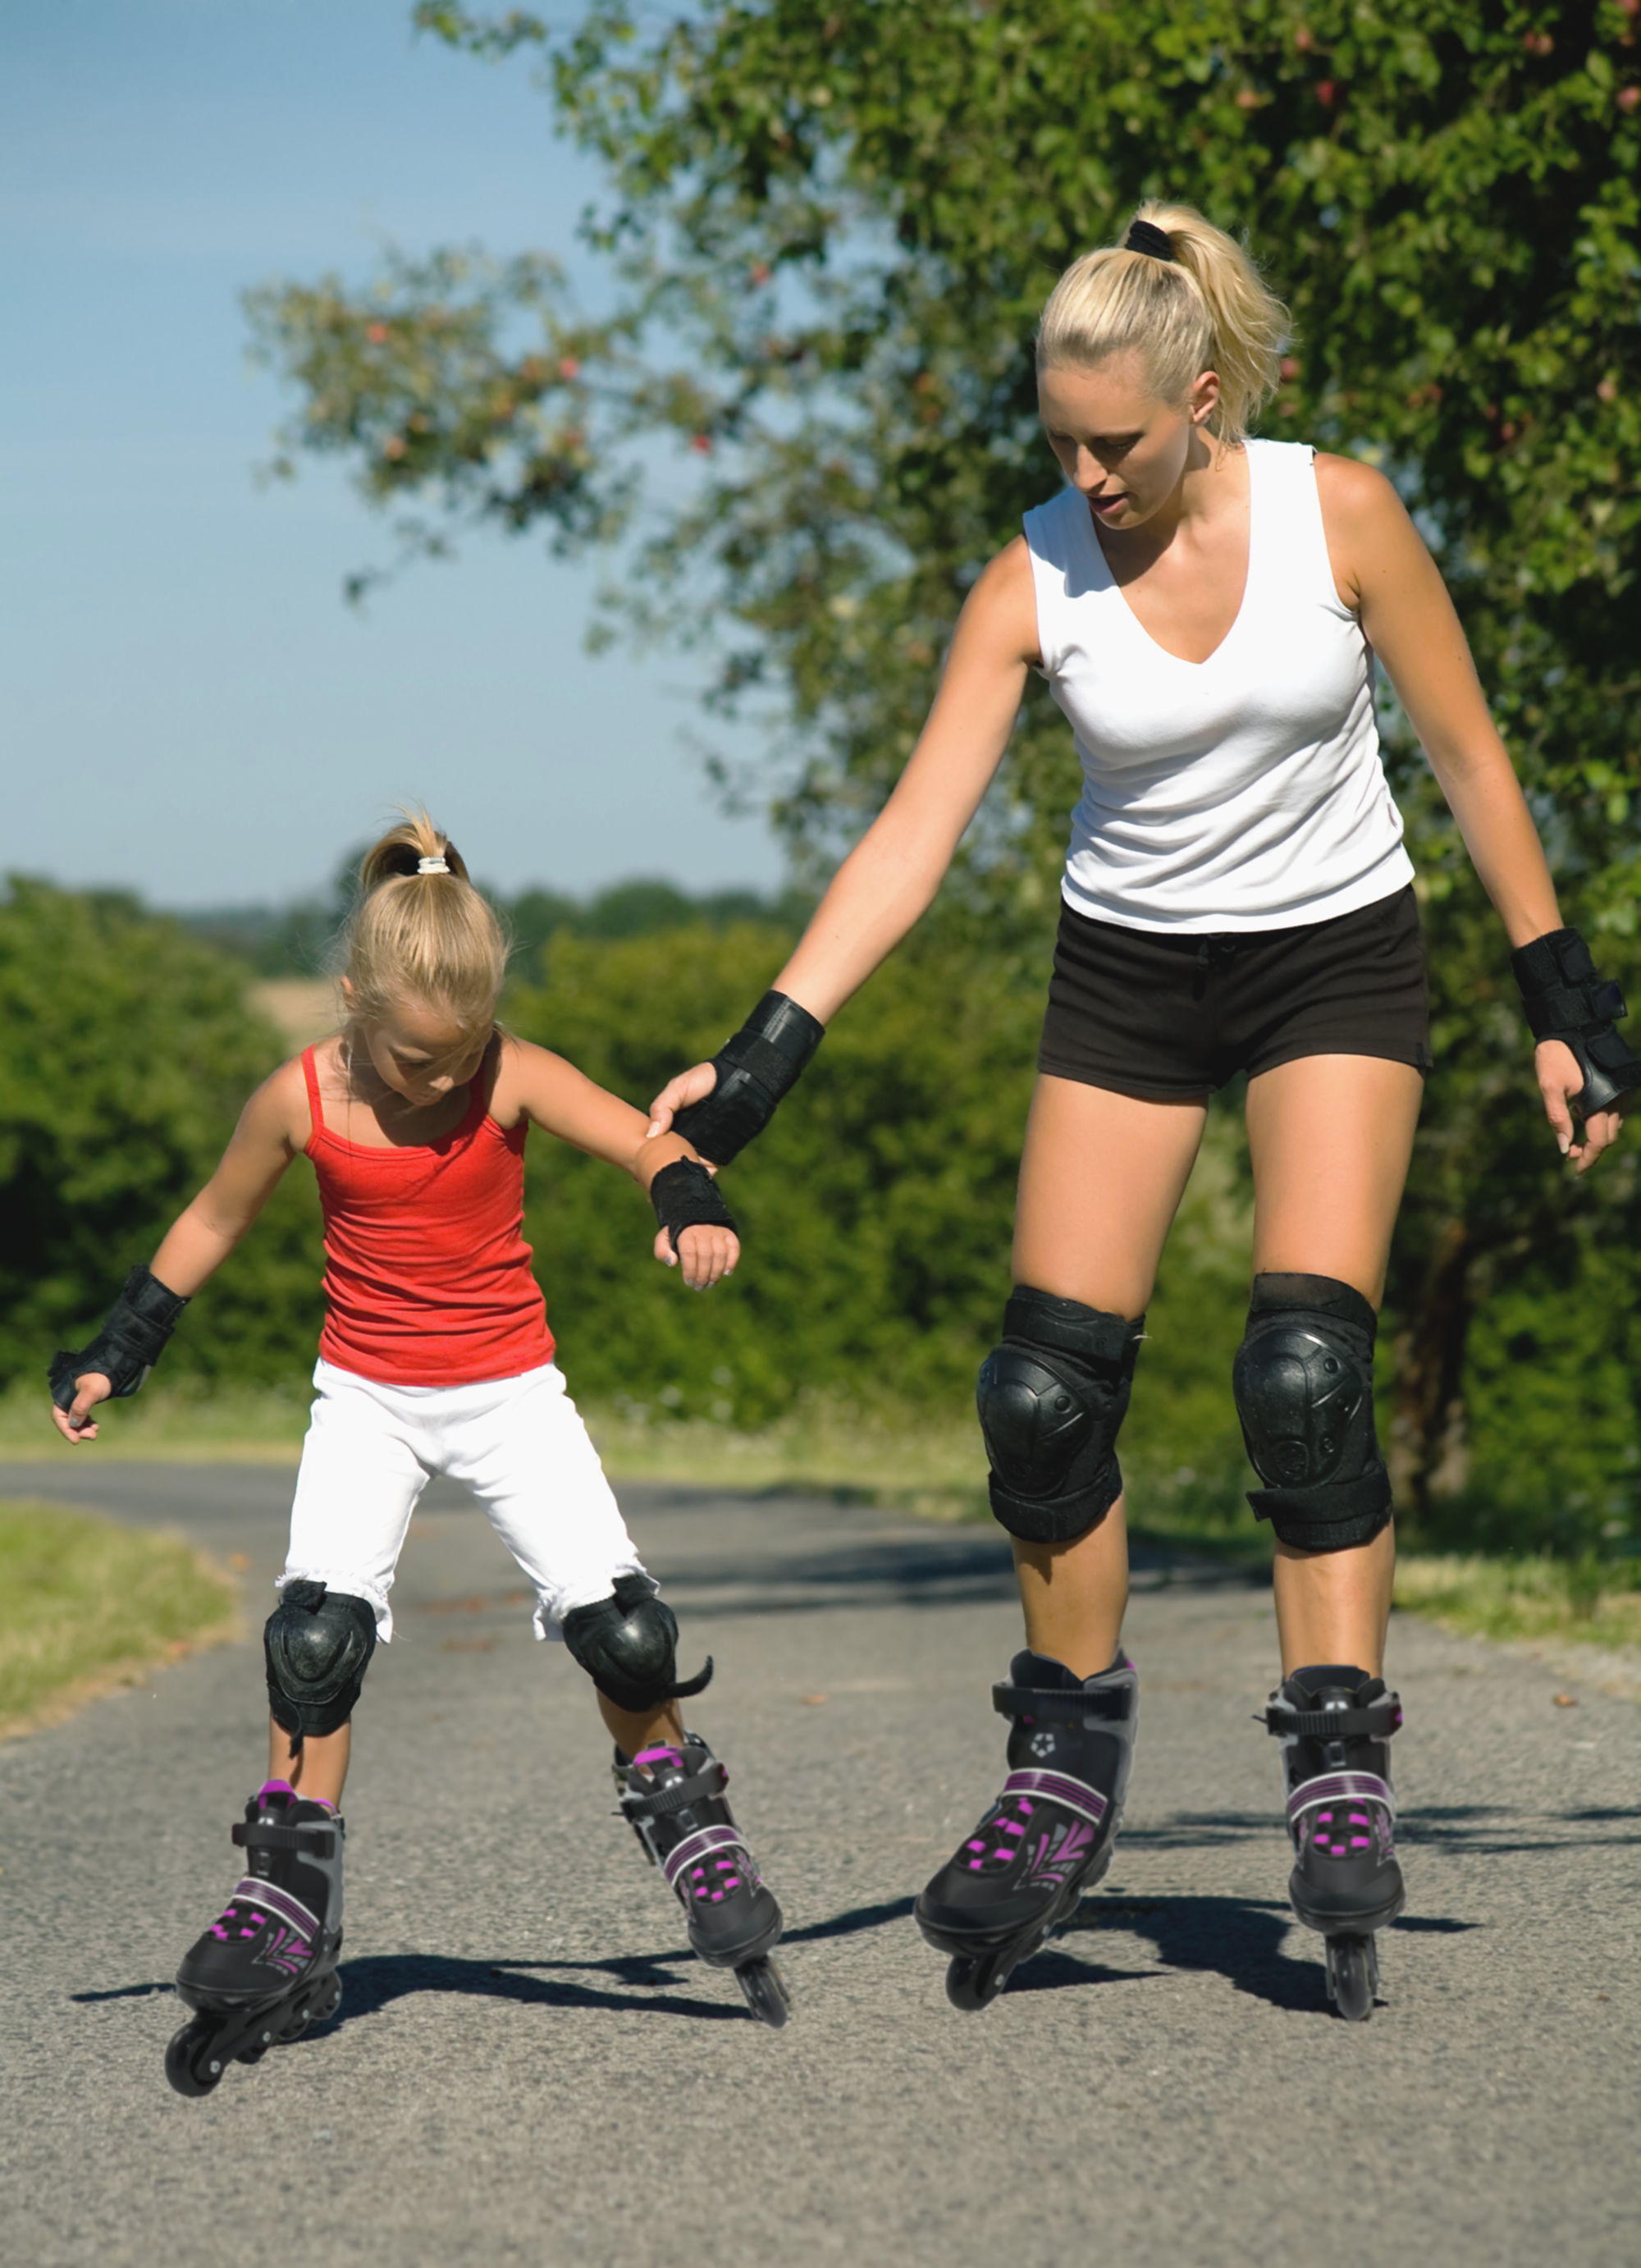 Inliner Skate Soft-Boot Kinder Jugend Damen Größenverstellung 5 Größen  verstellbar Stripes Pink | L.A. Sports Markenwelt